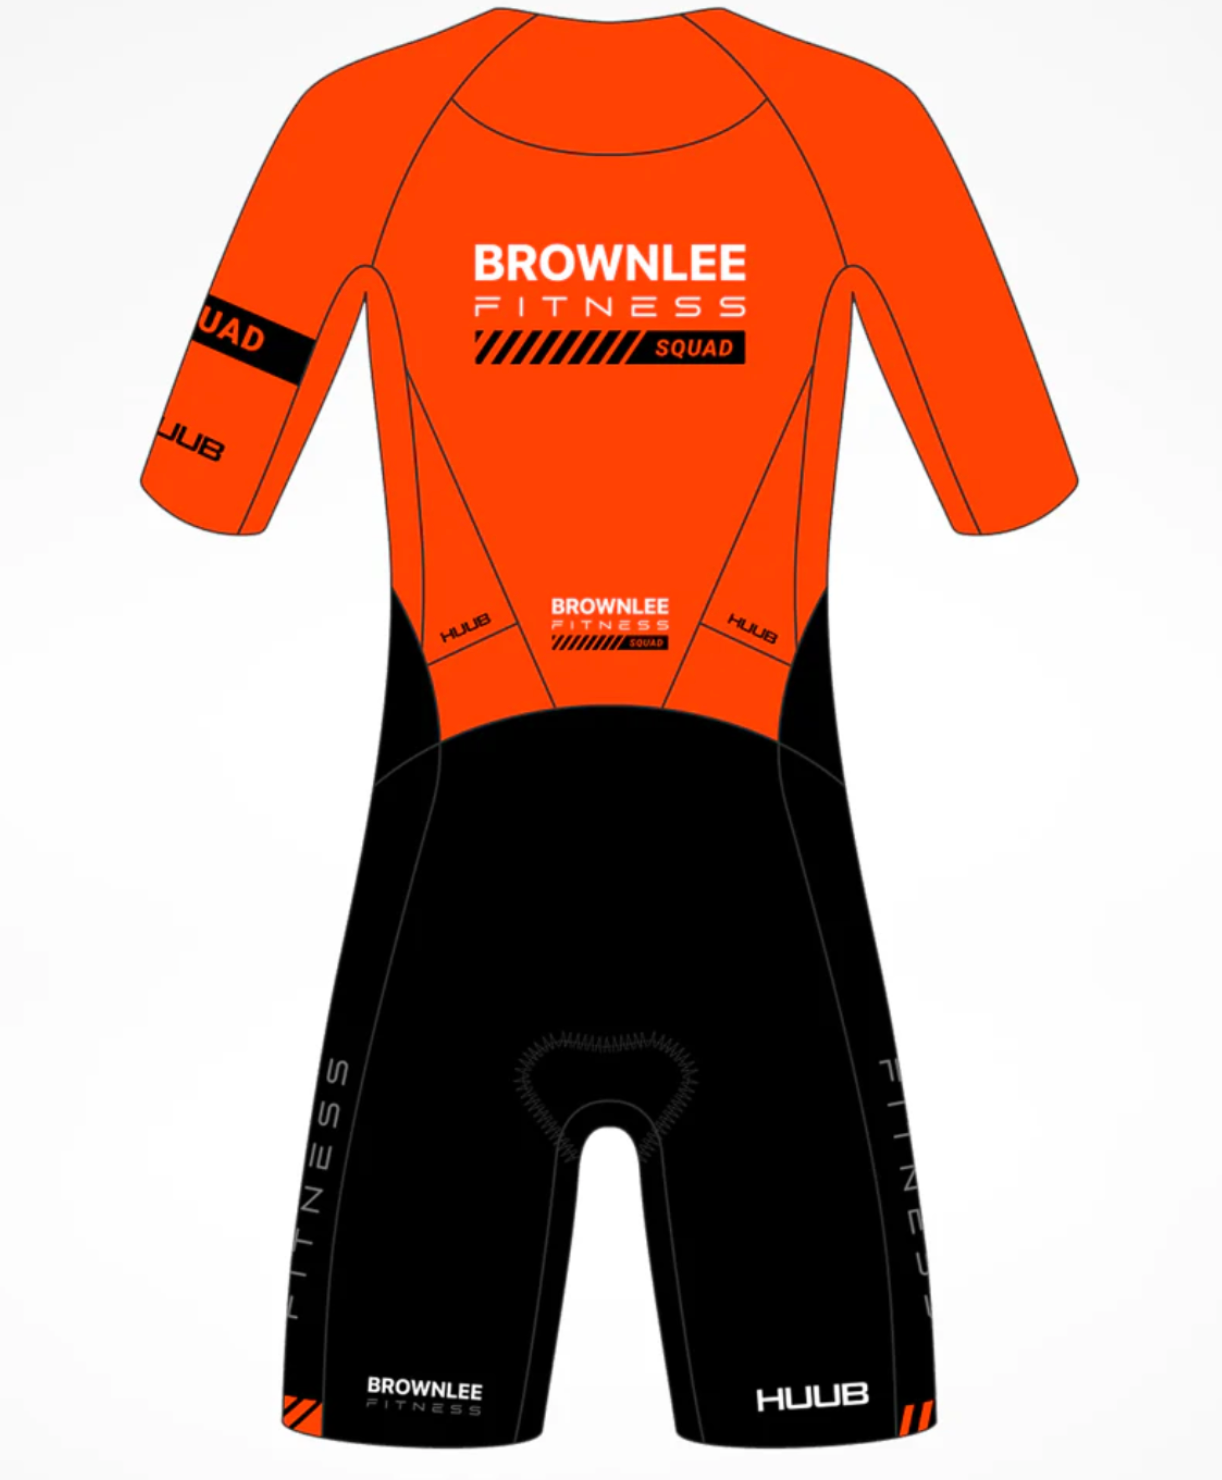 Brownlee Fitness Pro Aero LC Tri Suit Orange - Women's